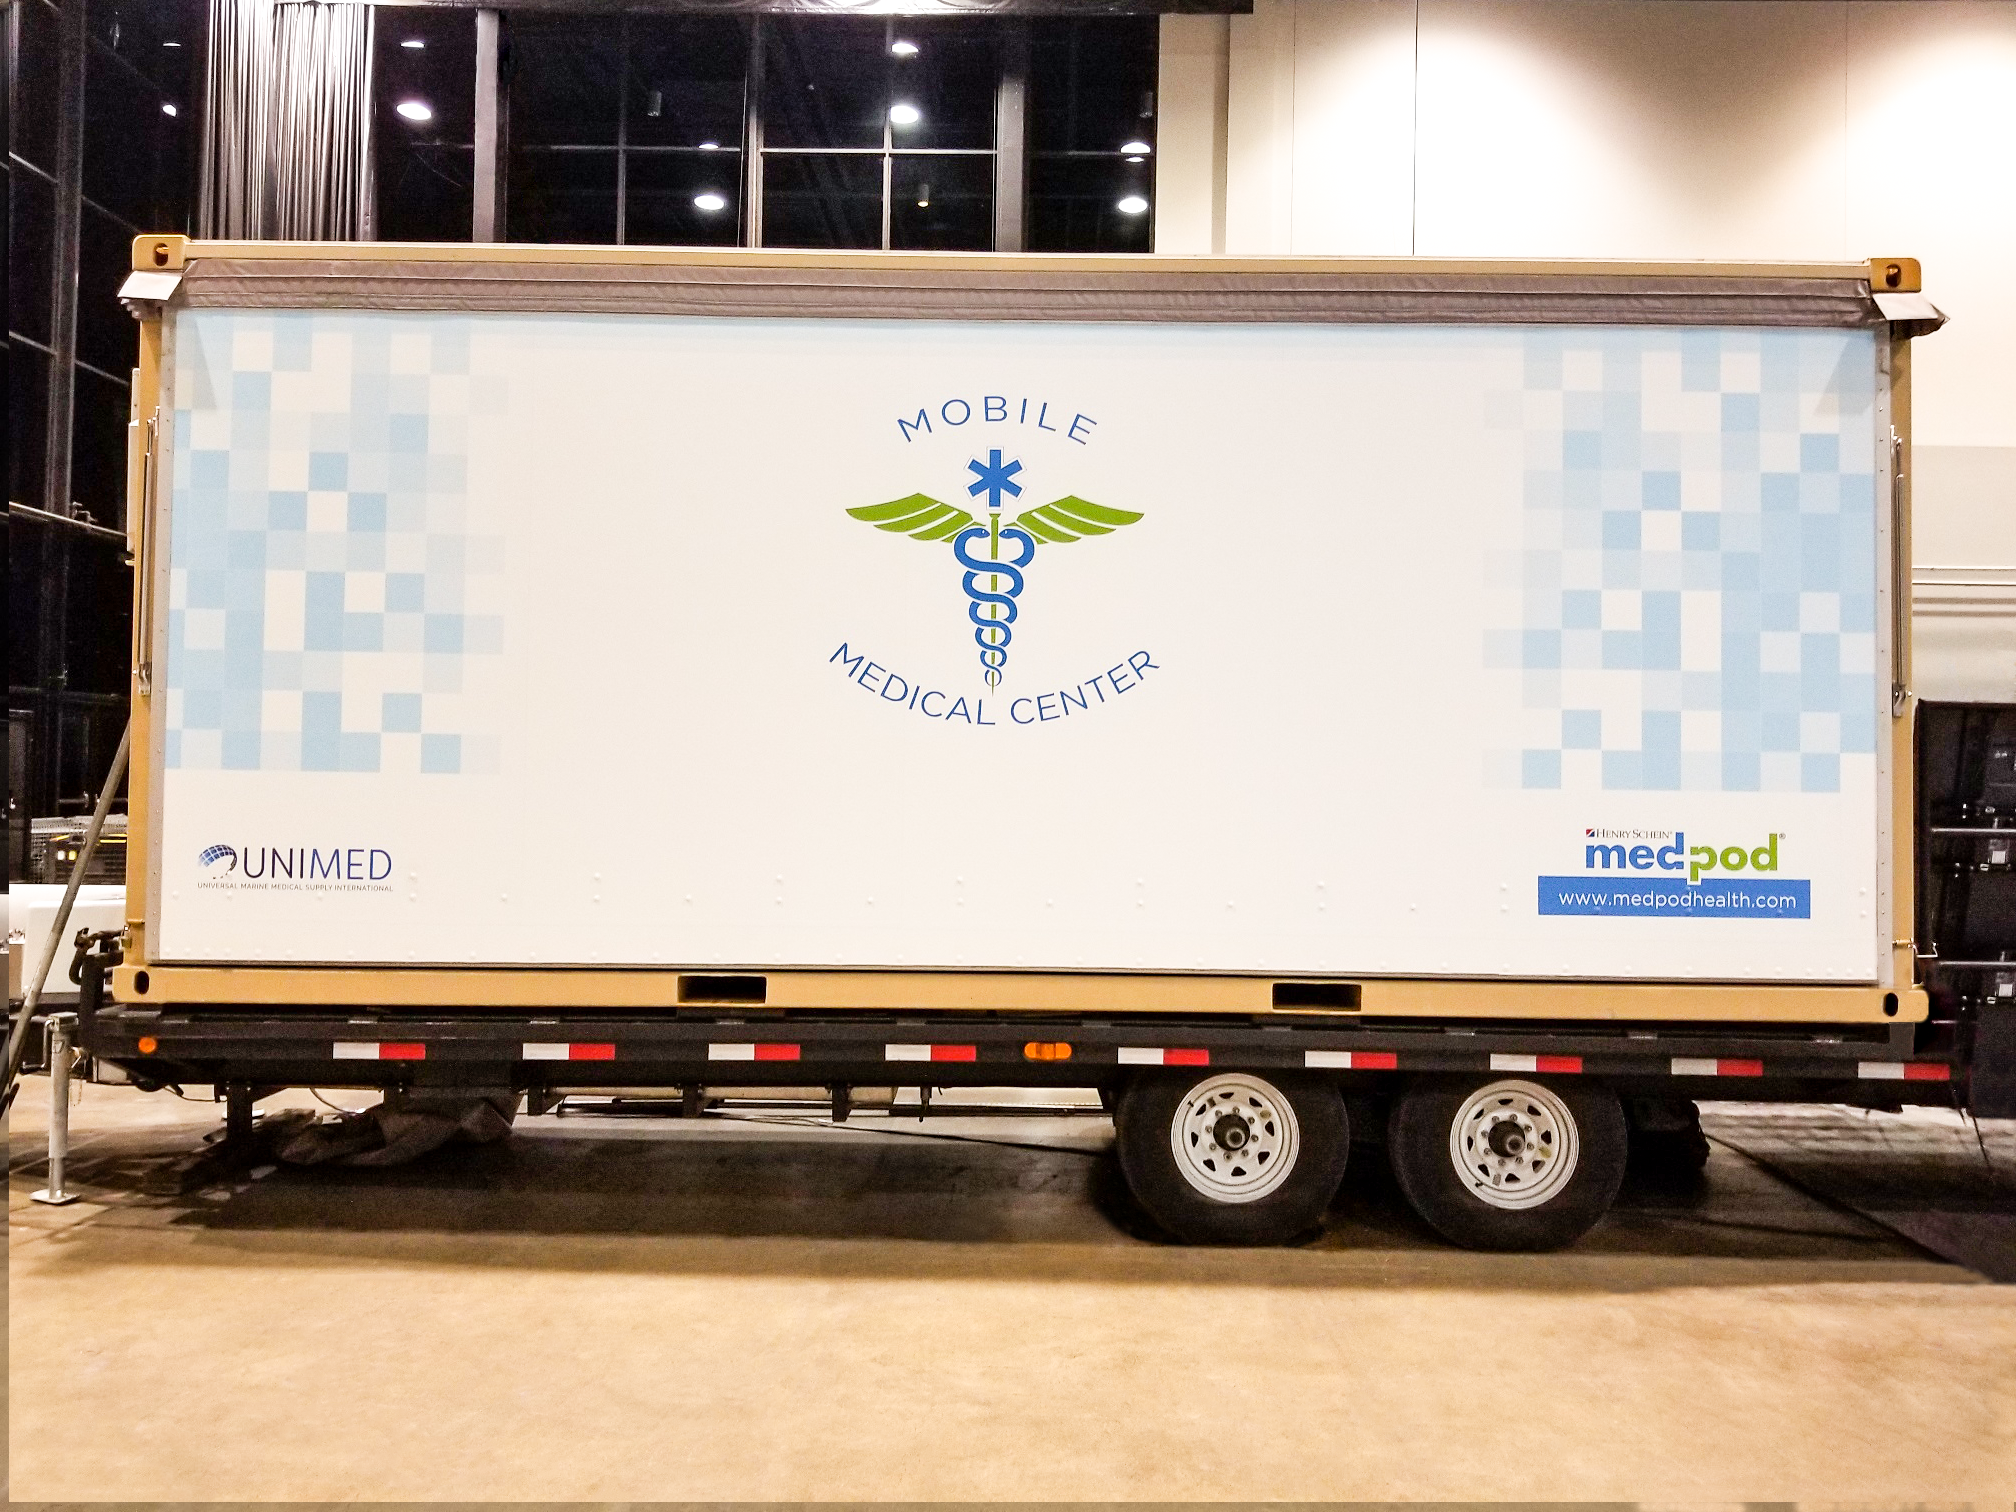 Vehicle wrap on trailer promoting Medpod's mobile medical center